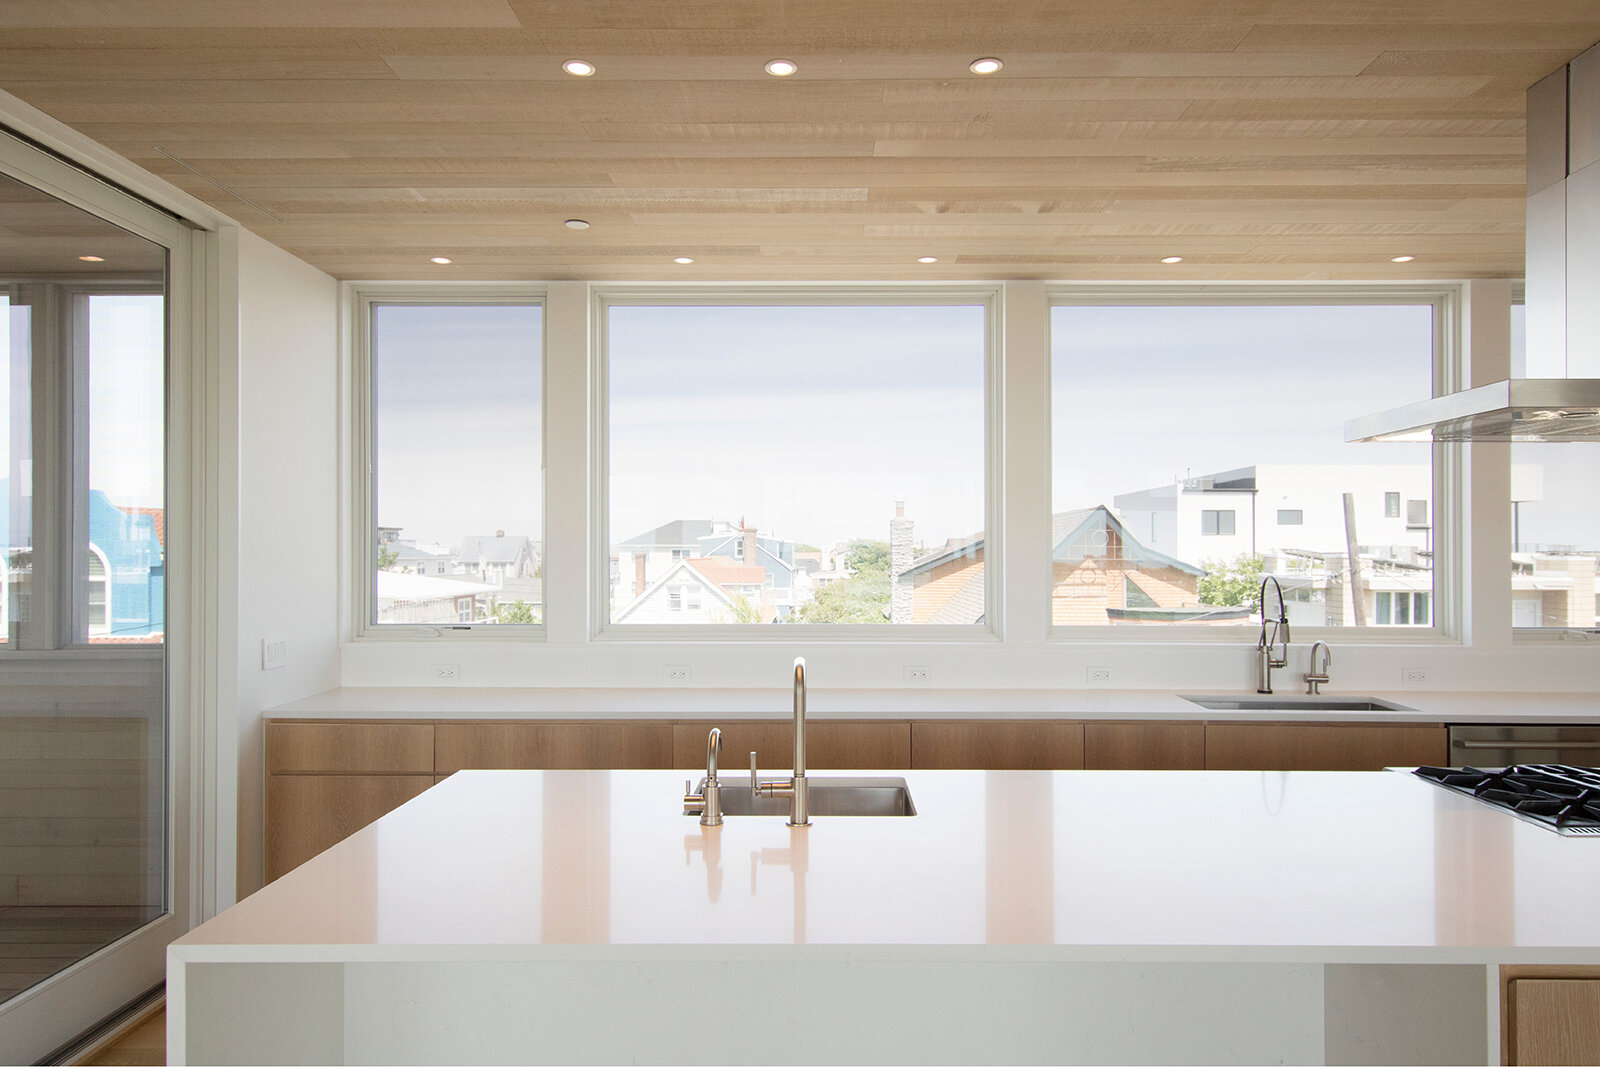 18-res4-resolution-4-architecture-modern-modular-house-prefab-home-lido-beach-house-2-long-island-ny-interior-kitchen-prep-sink.jpg